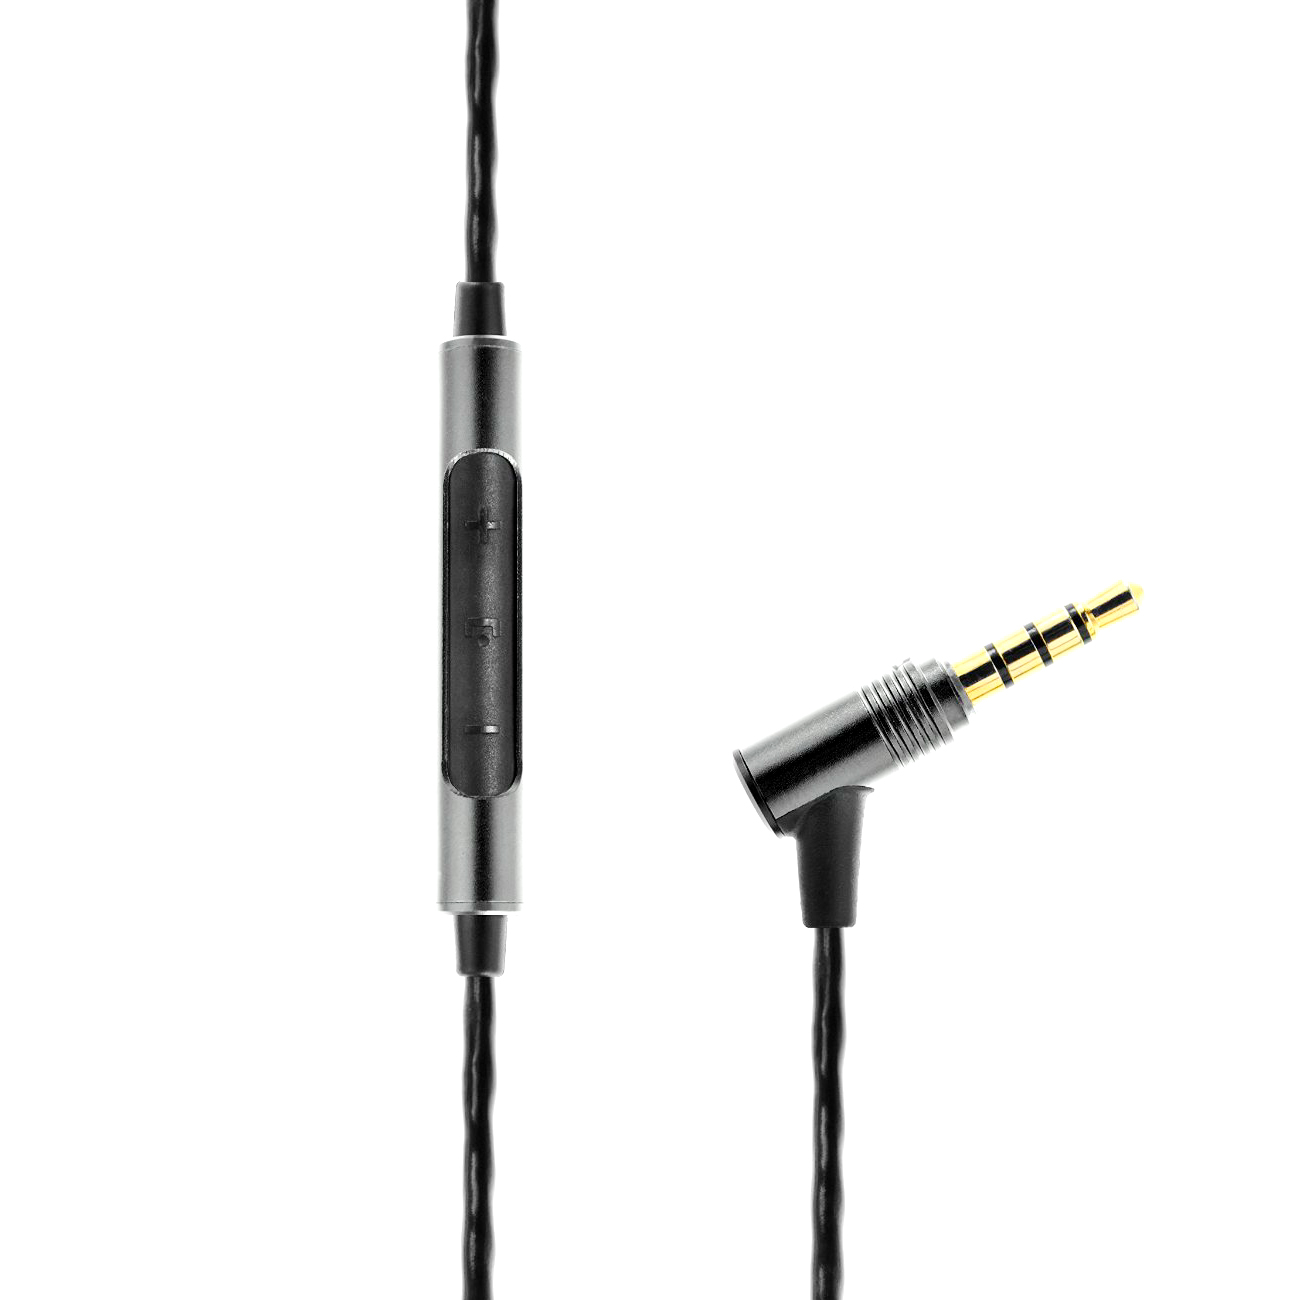 Soundmagic E80C หูฟัง In-Ear Noise Isolating with Microphone มีไมค์ควบคุมเสียง สีดำ ของแท้ ประกันศูนย์ 1ปี (Black)